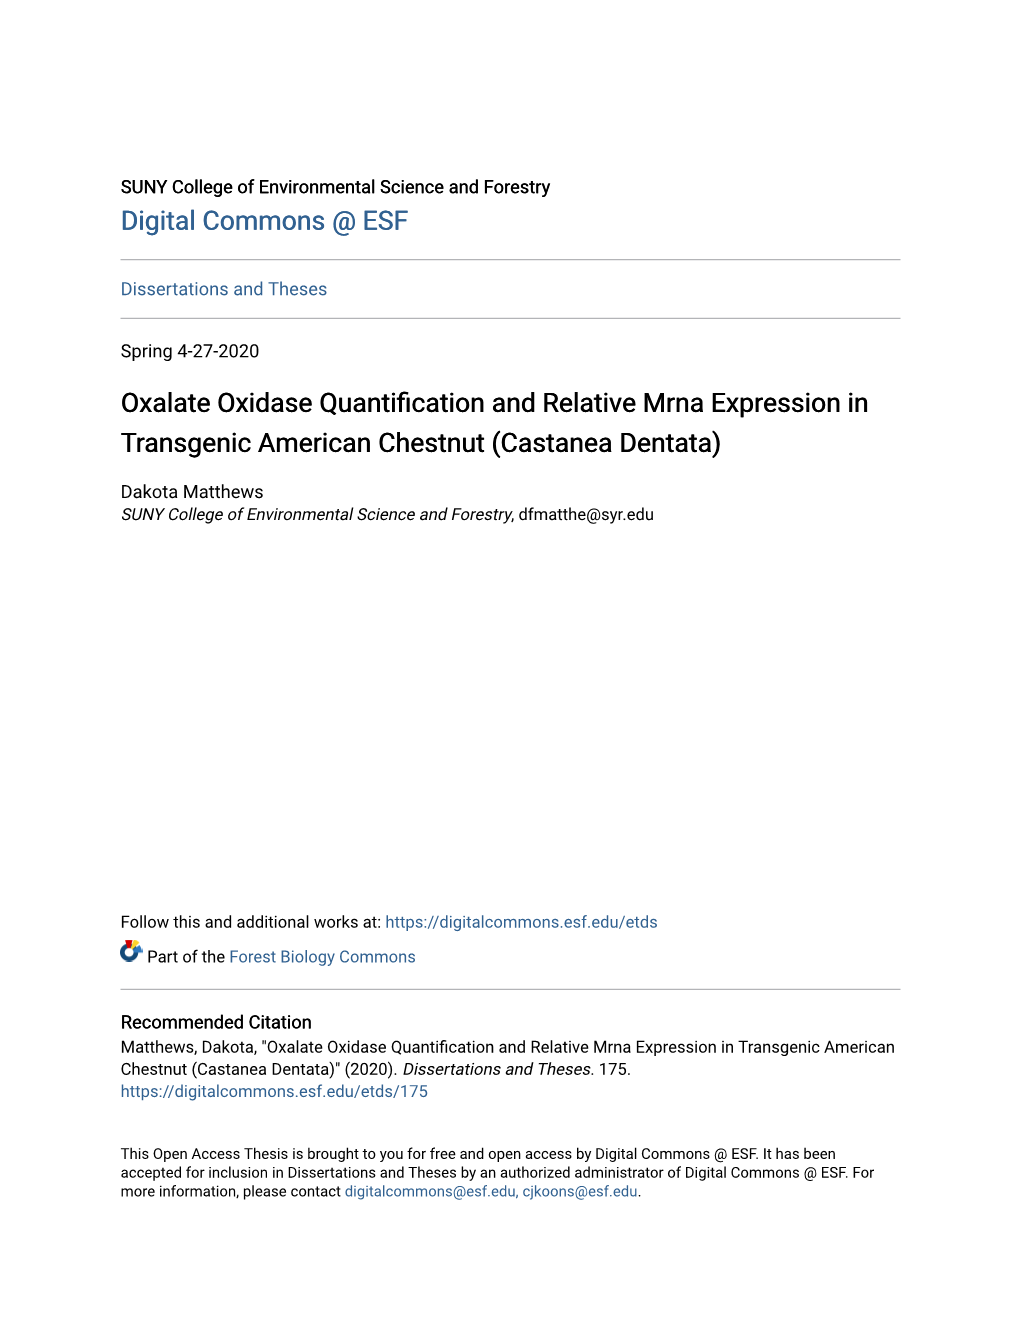 Oxalate Oxidase Quantification and Relative Mrna Expression in Transgenic American Chestnut (Castanea Dentata)